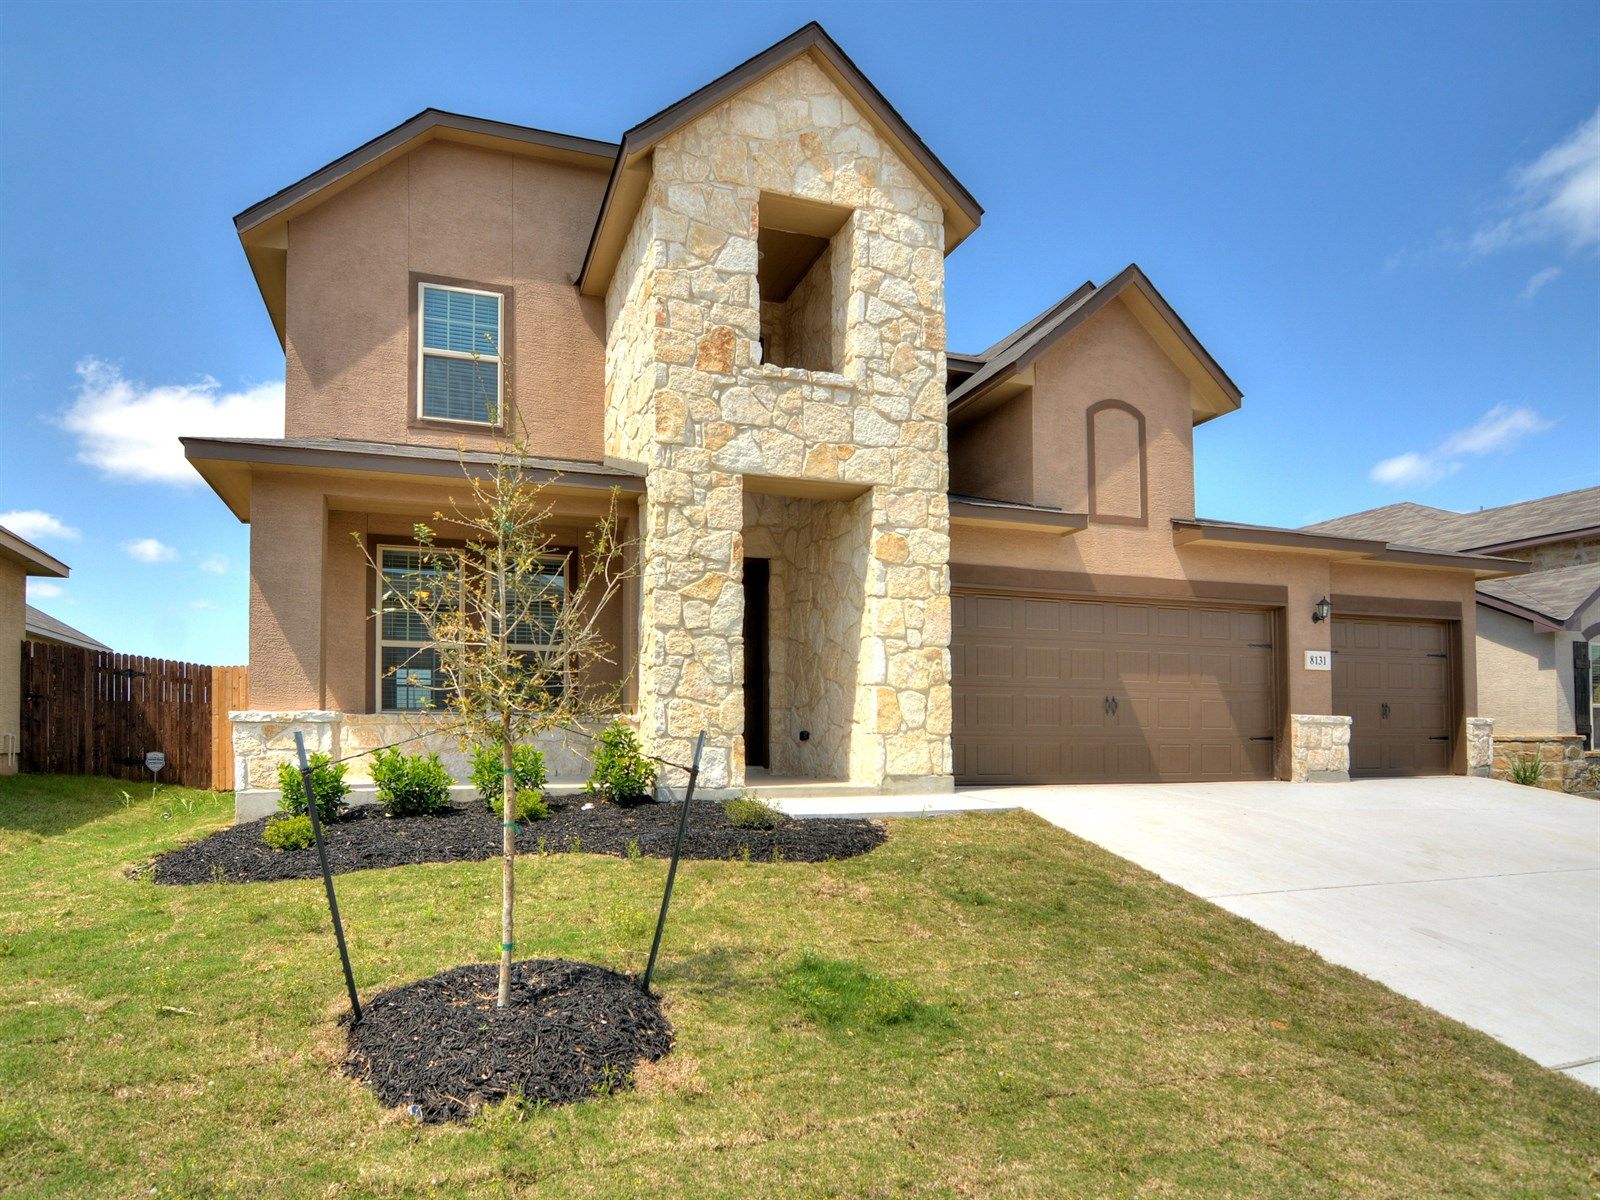 San Antonio Homes For Sale Homes For Sale In San Antonio TX HomeGain